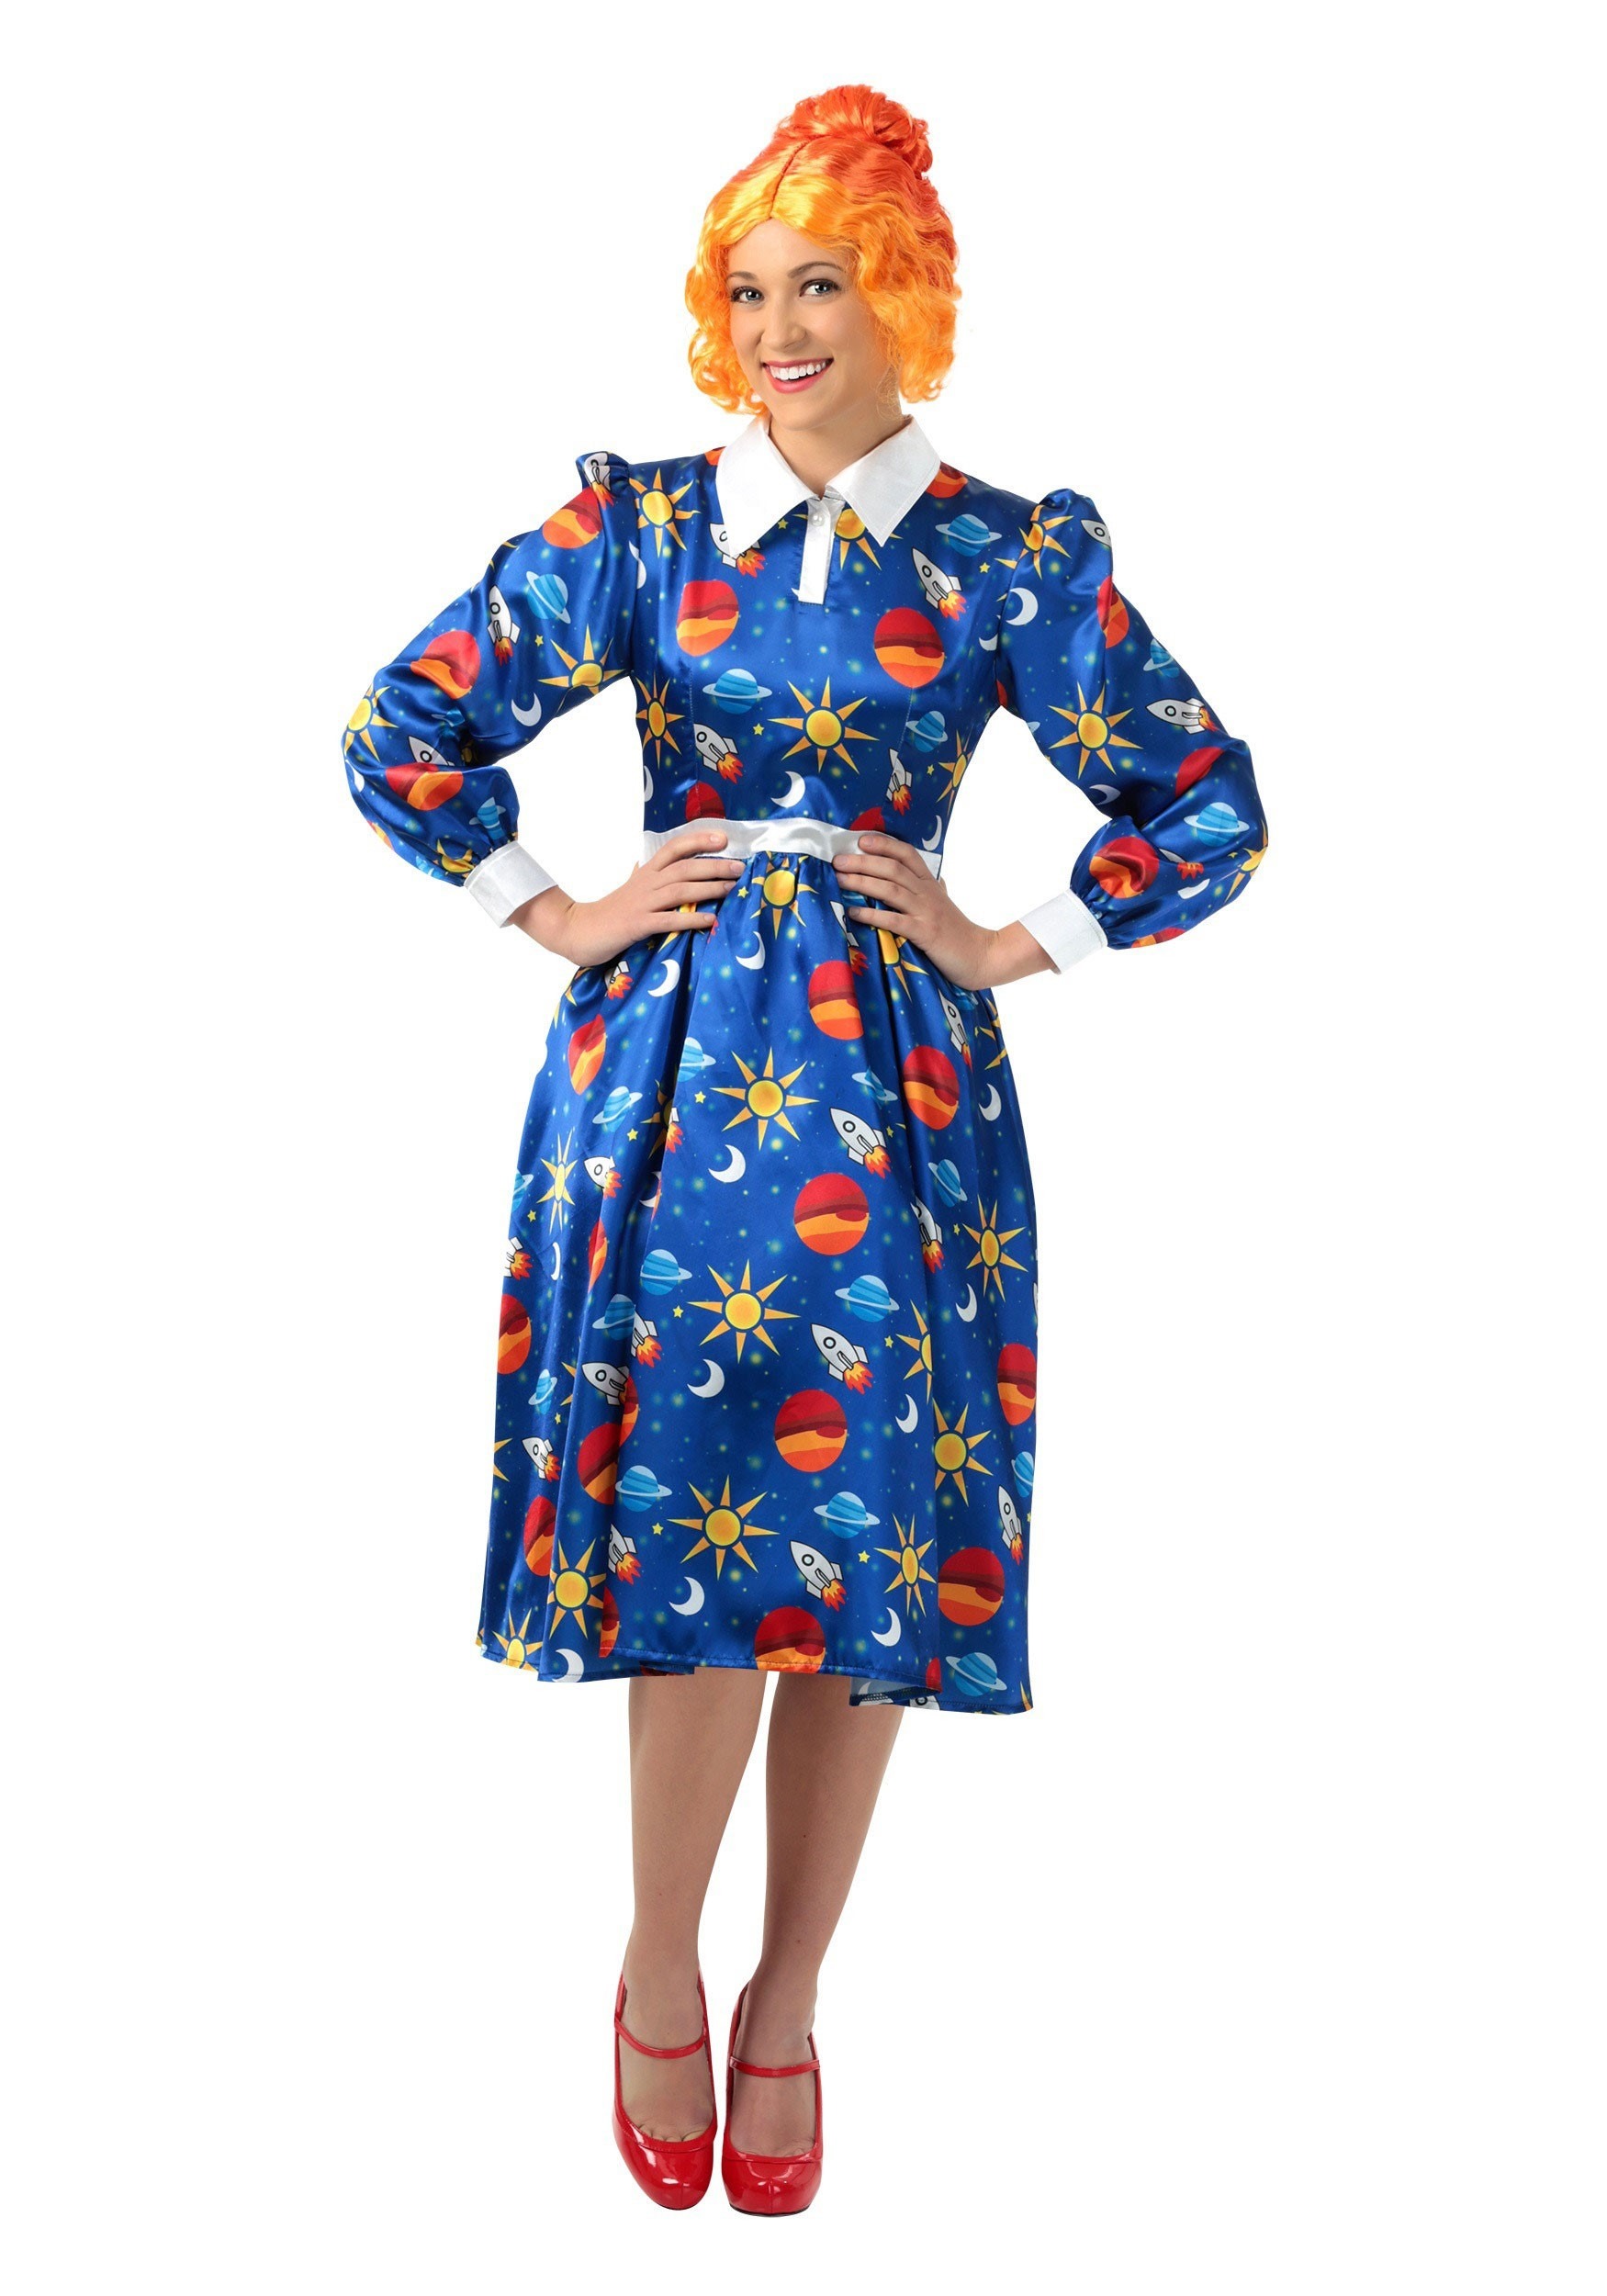 16.) The Magic School Bus Miss Frizzle Plus Size Costume